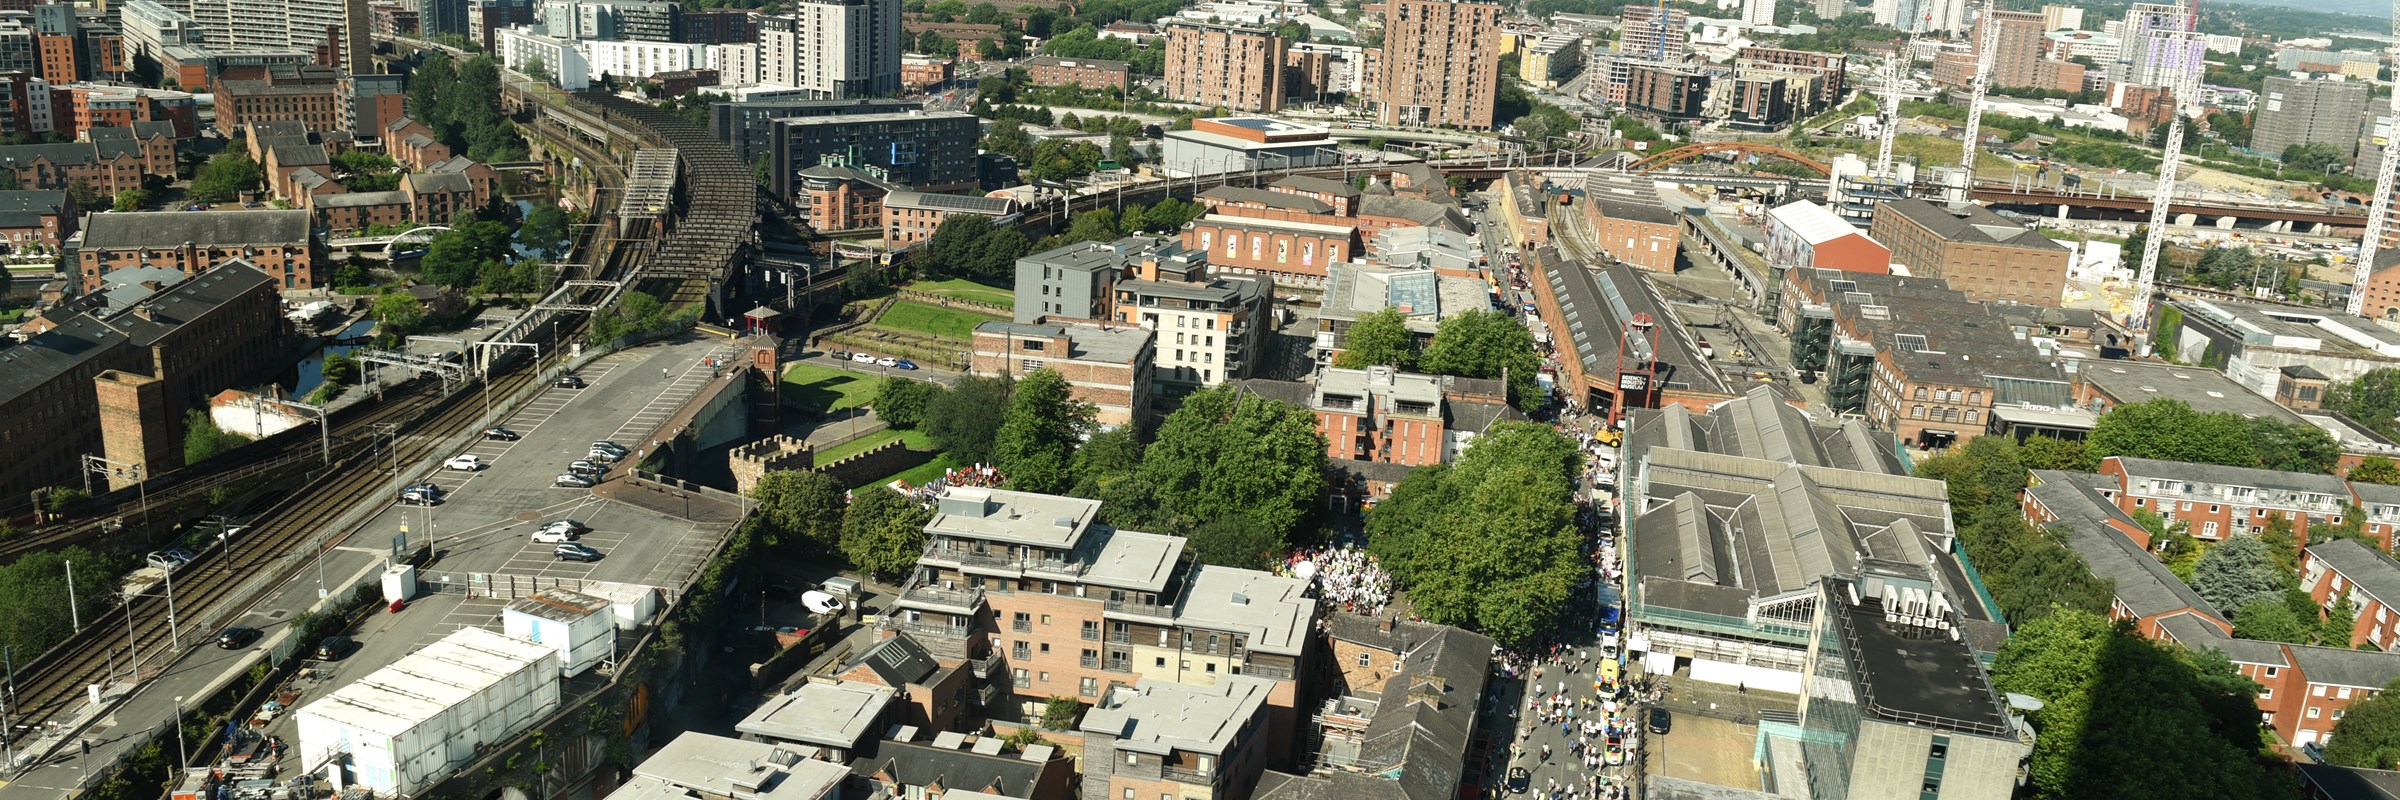 Image shows Manchester city centre skyline